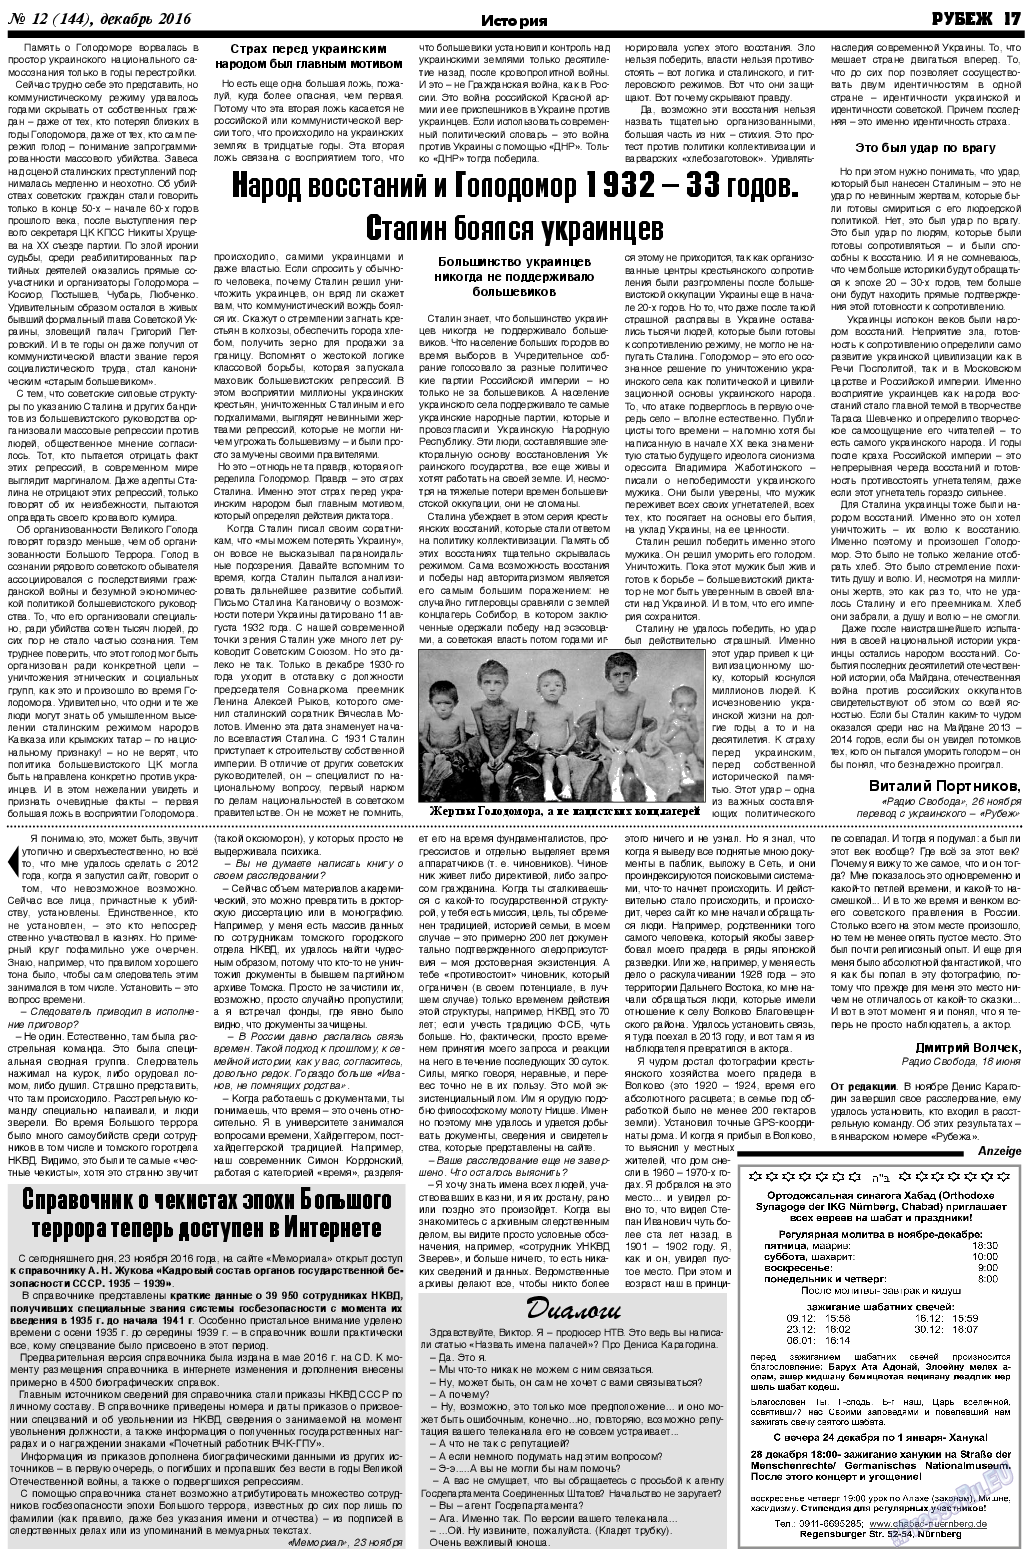 Рубеж, газета. 2016 №12 стр.17